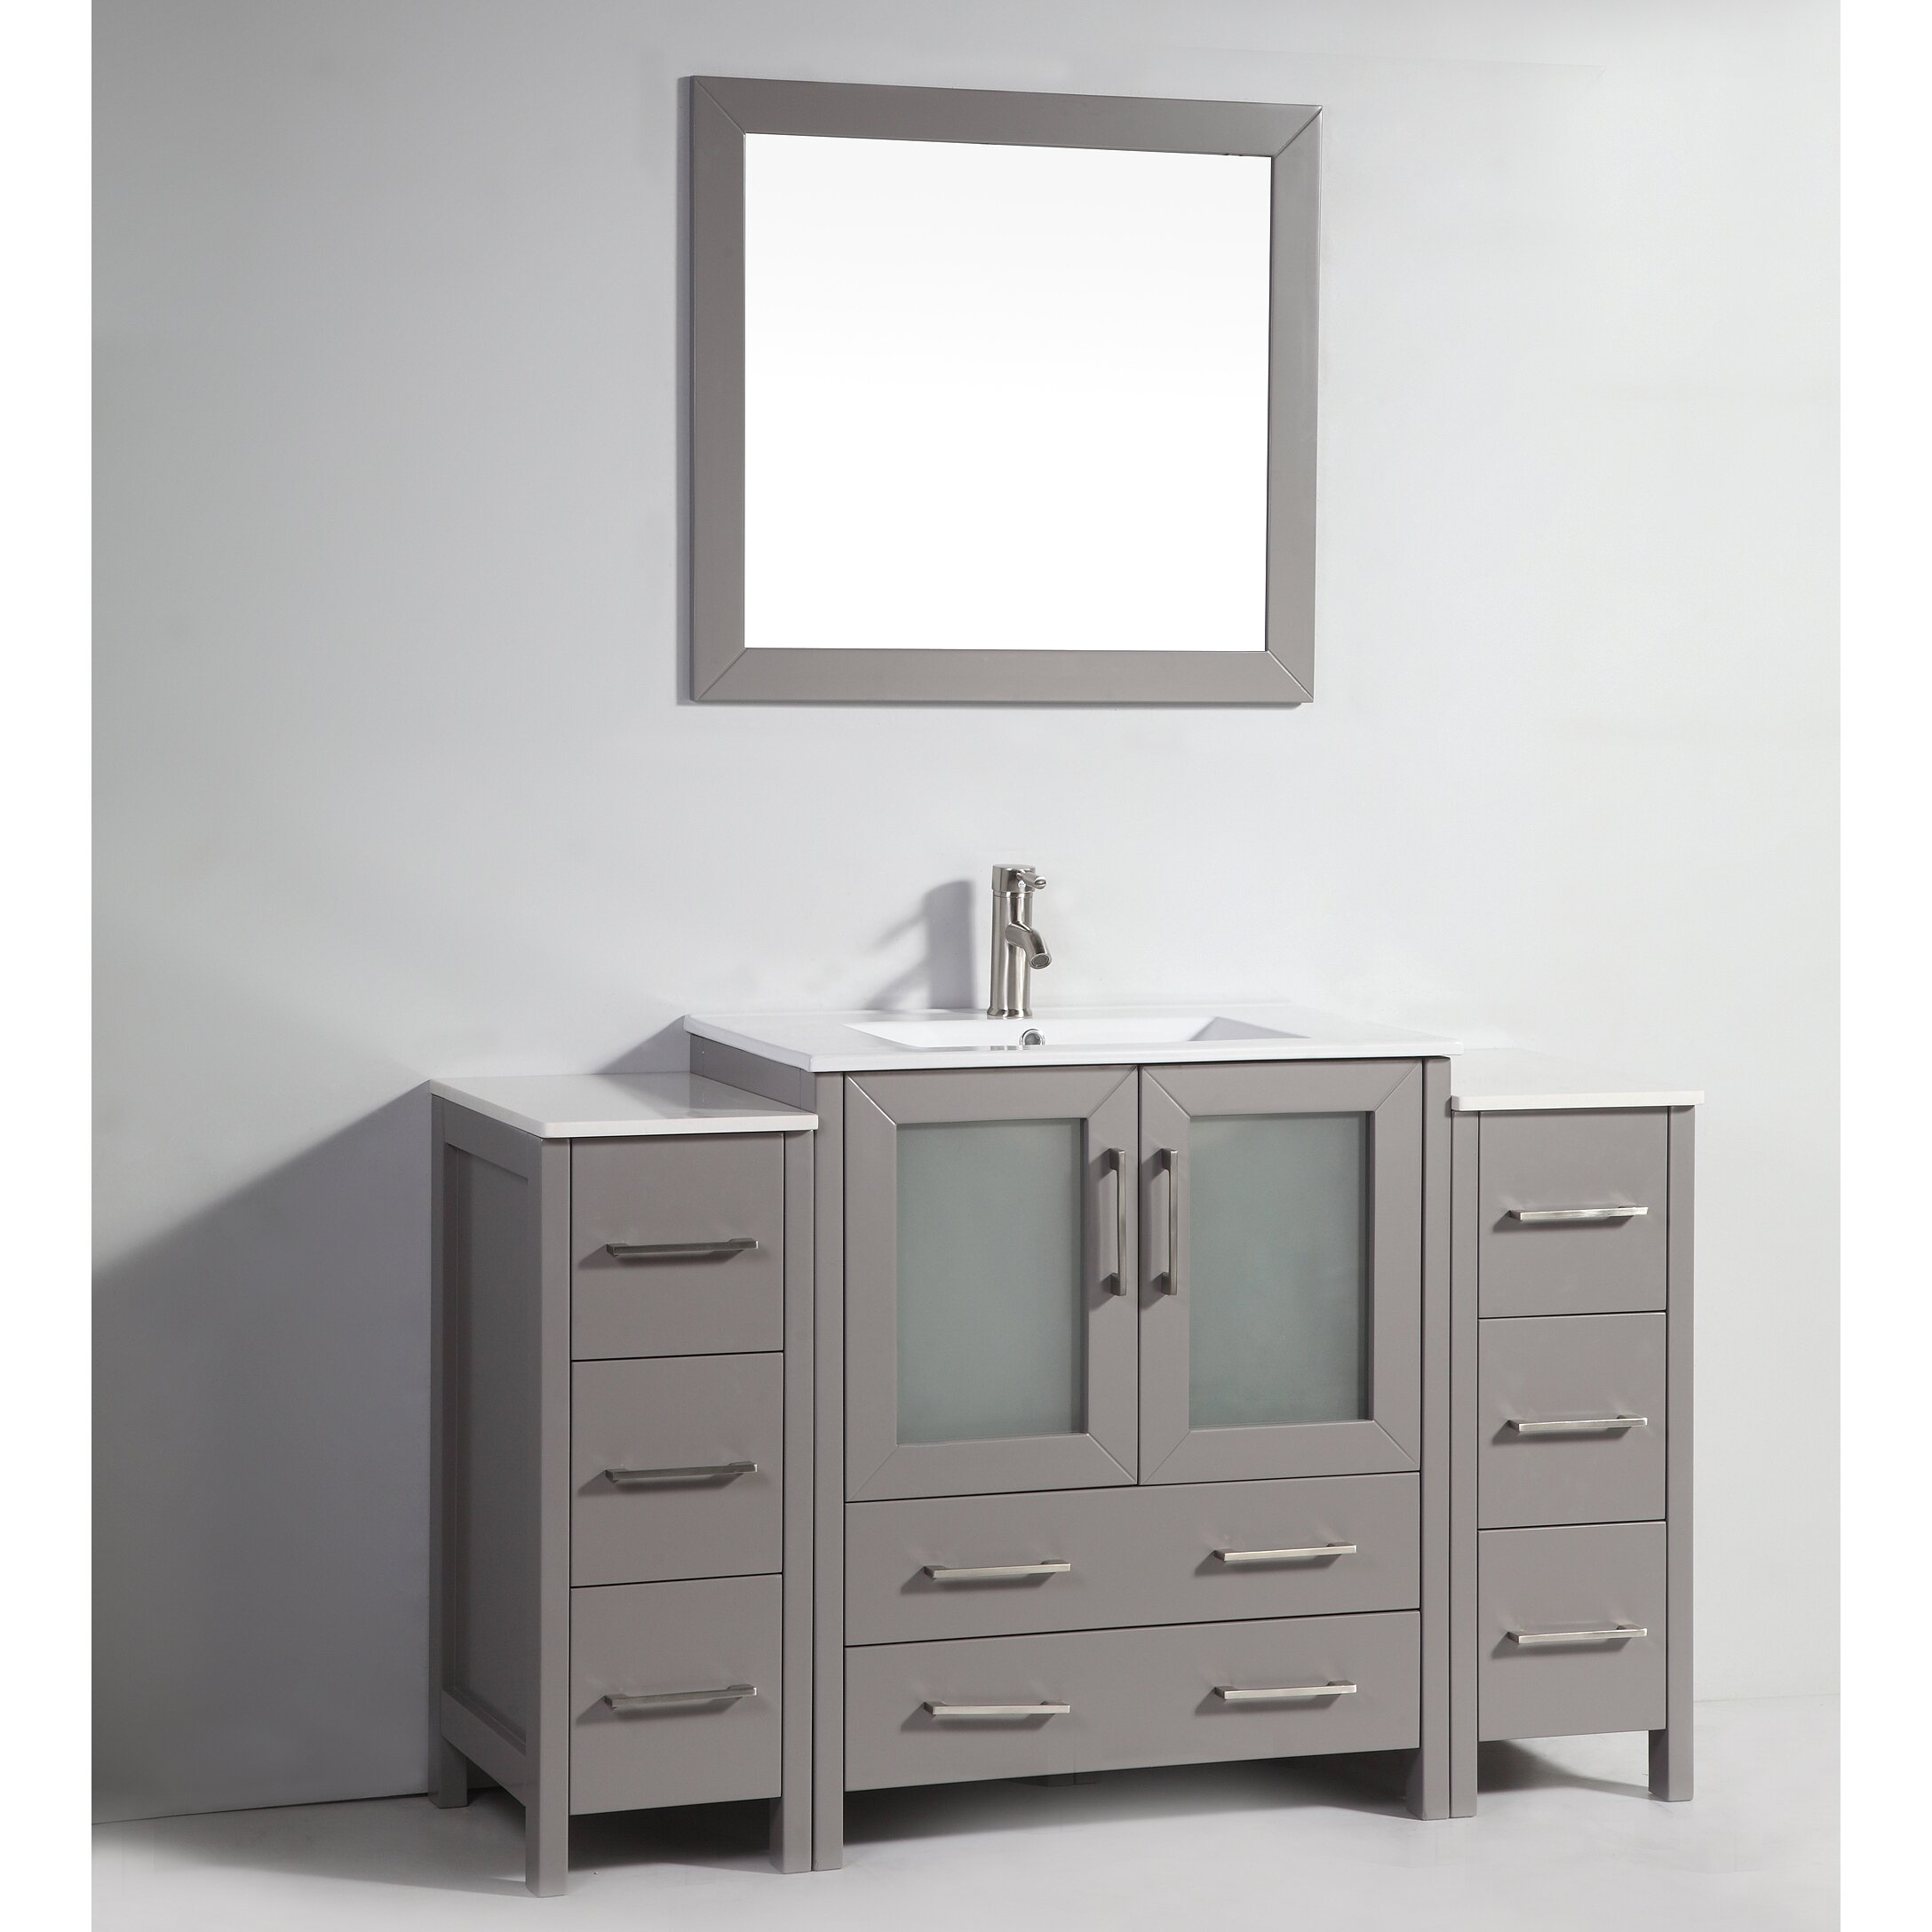 54" Single Solid Wood Bathroom Vanity Set with Mirror ...